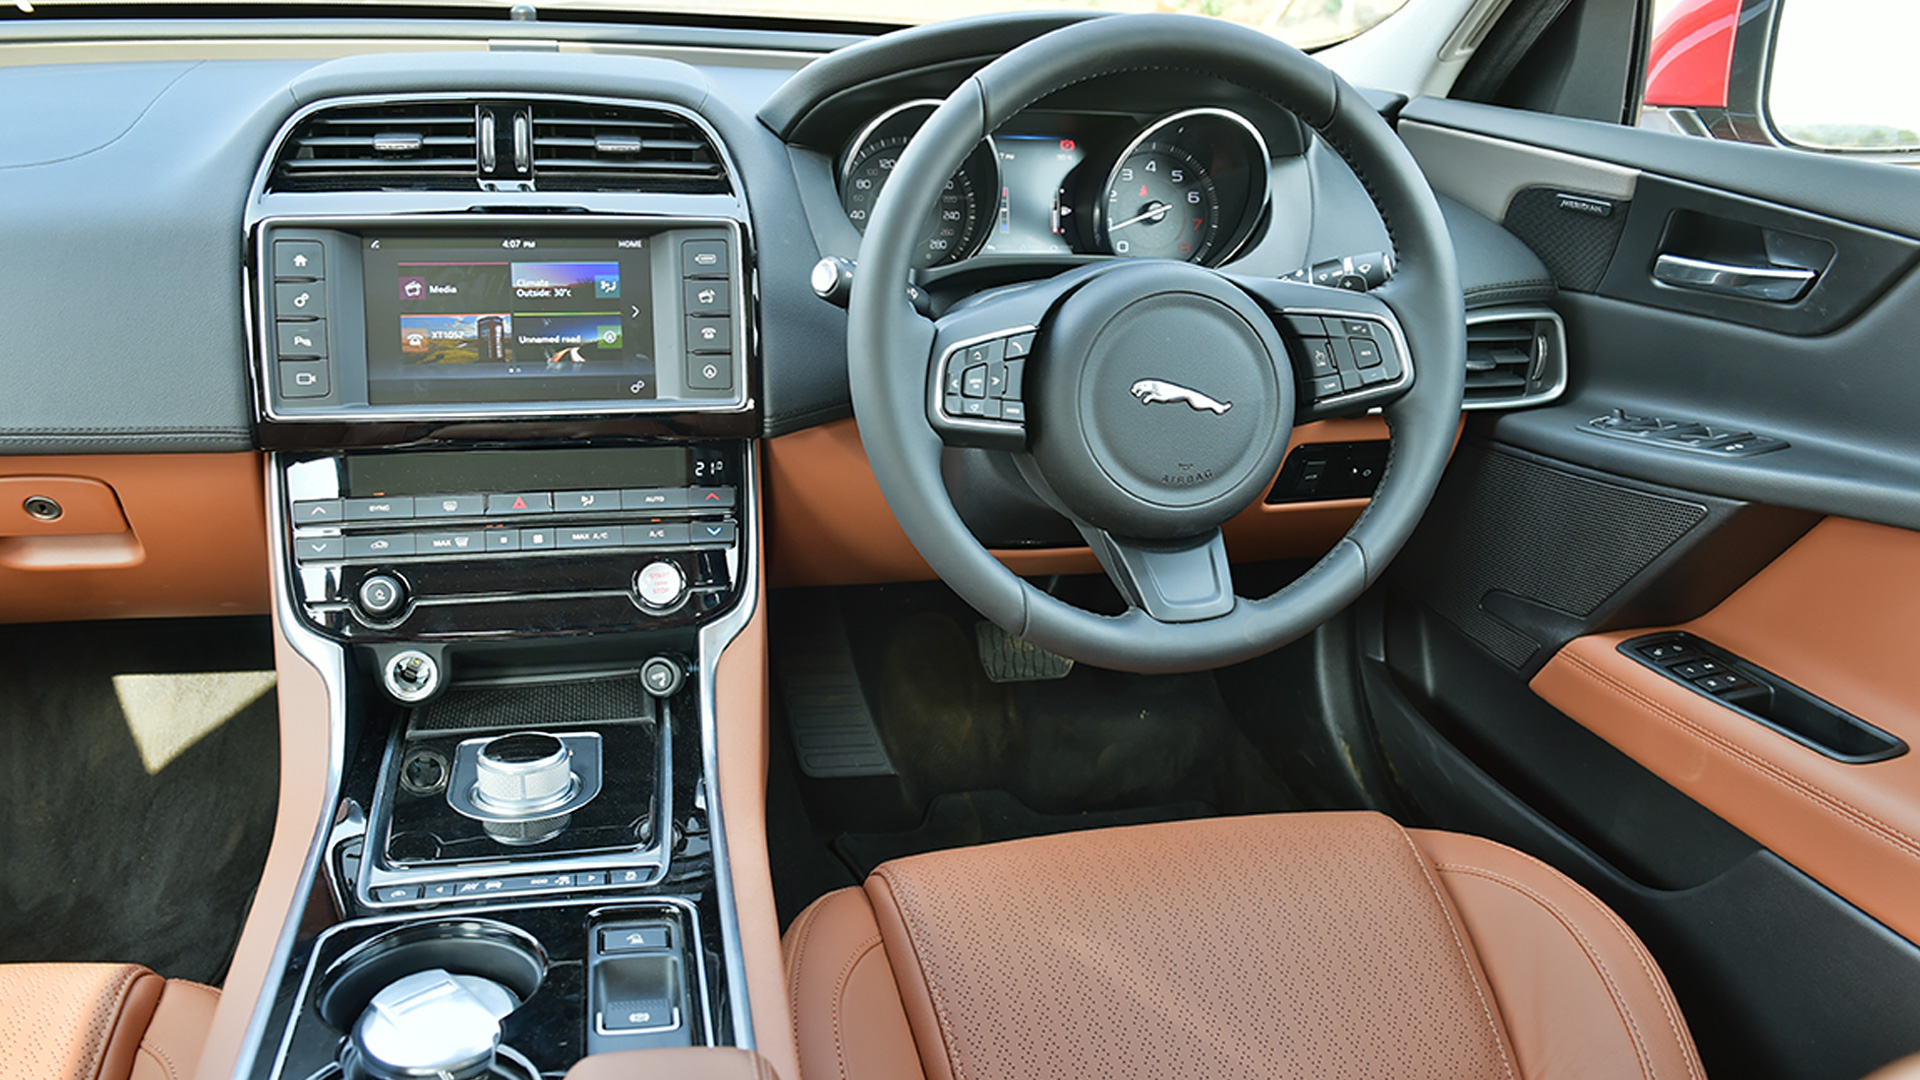 Jaguar XE 2016 Pure Exterior